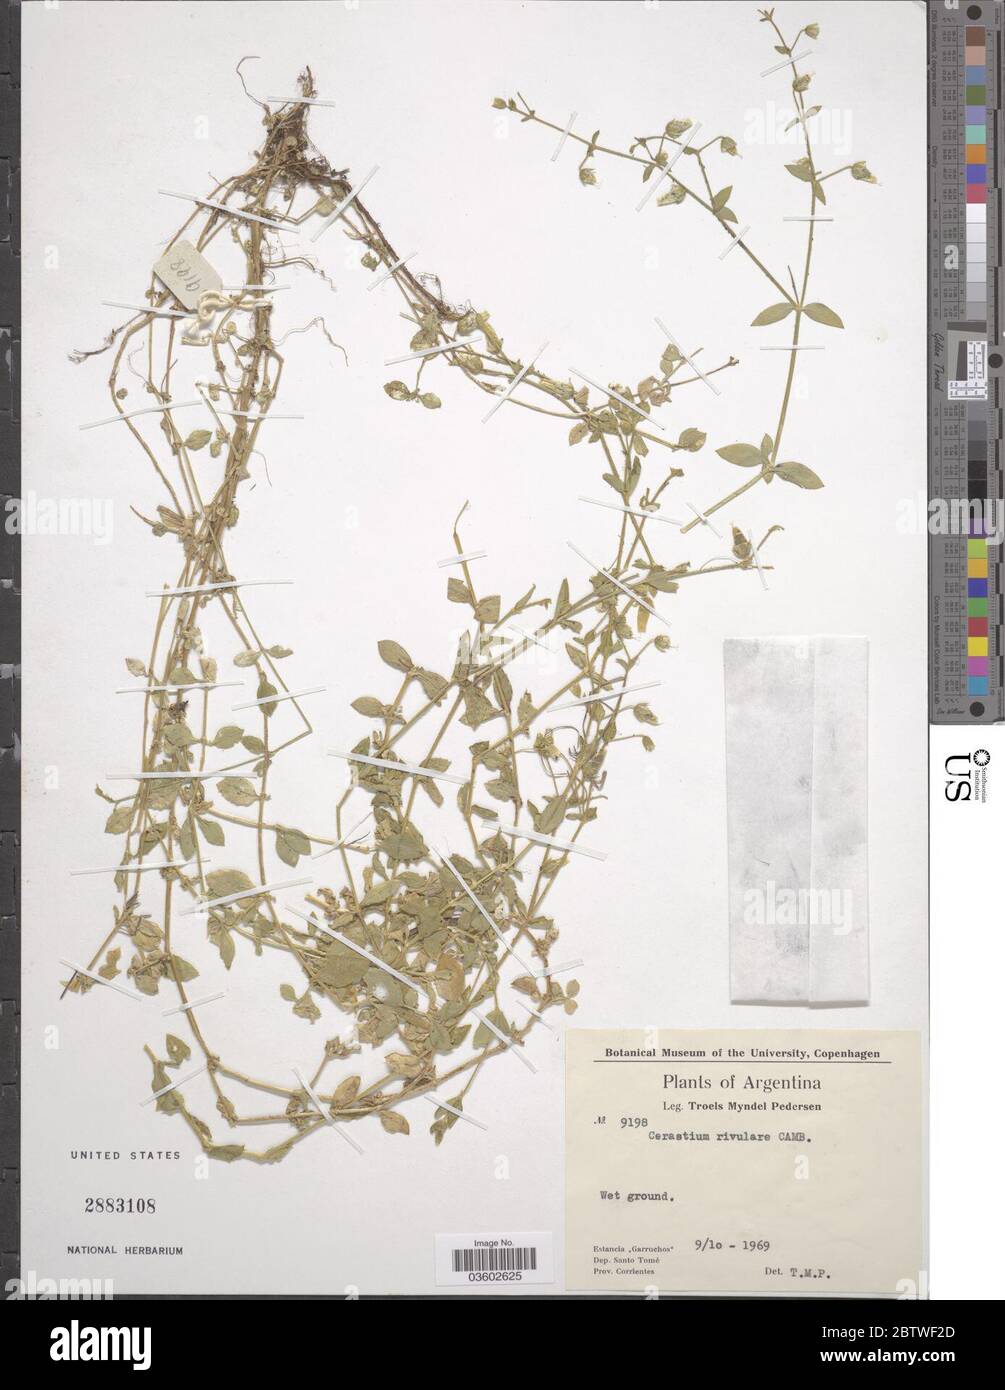 Cerastium rivulare Cambess. Stock Photo